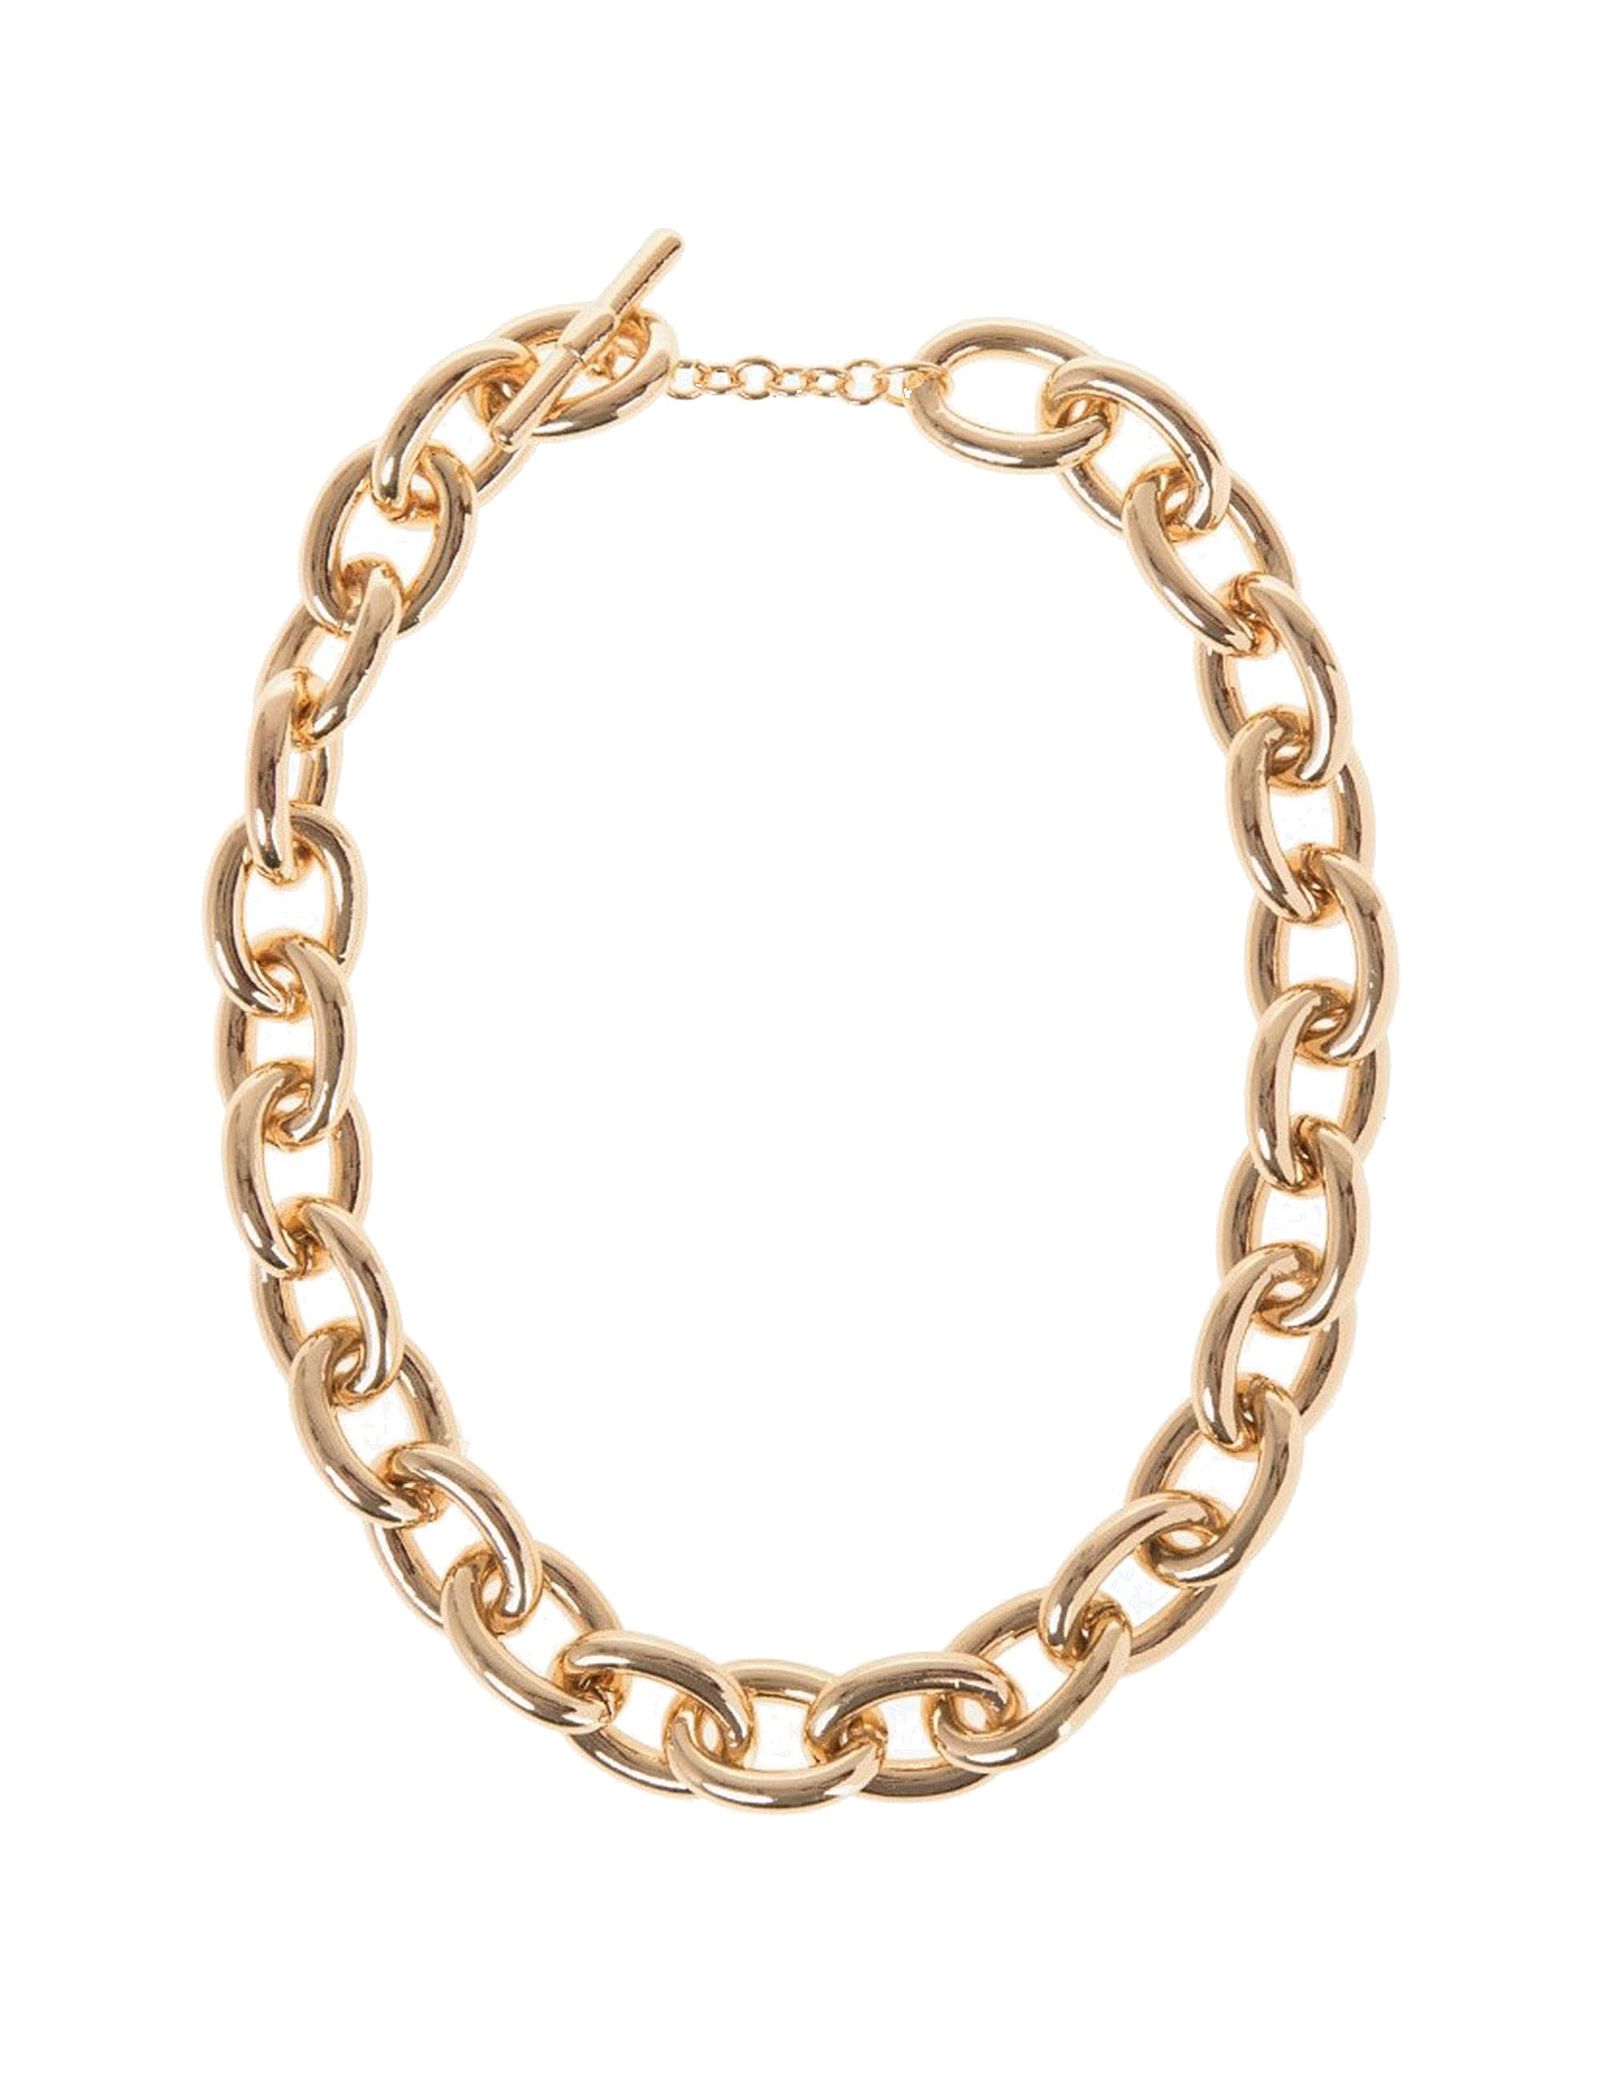 گردنبند زنجیری زنانه - پارفوا - طلايي - 1